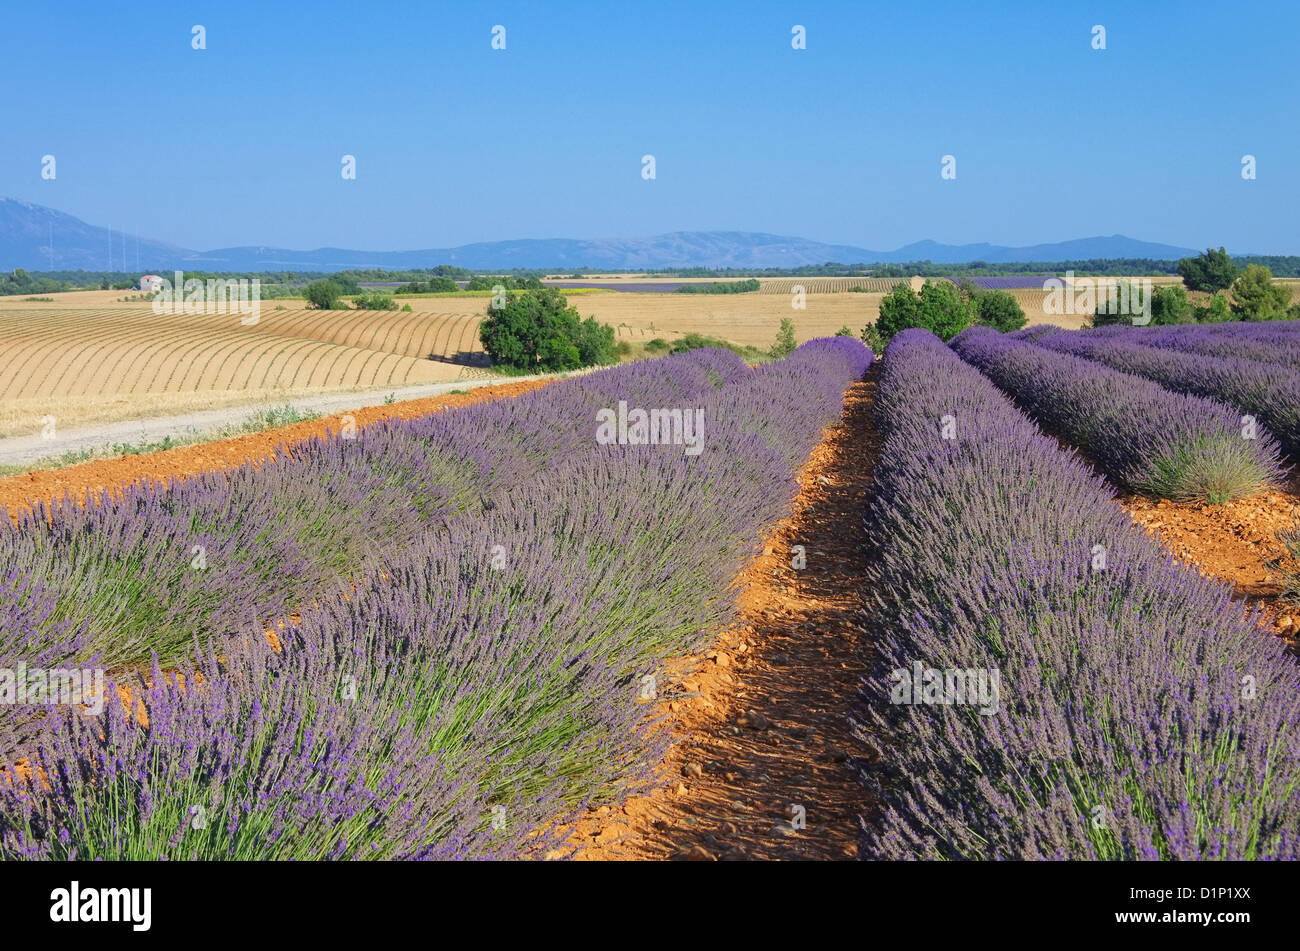 Lavendelfeld - lavender field 21 Stock Photo